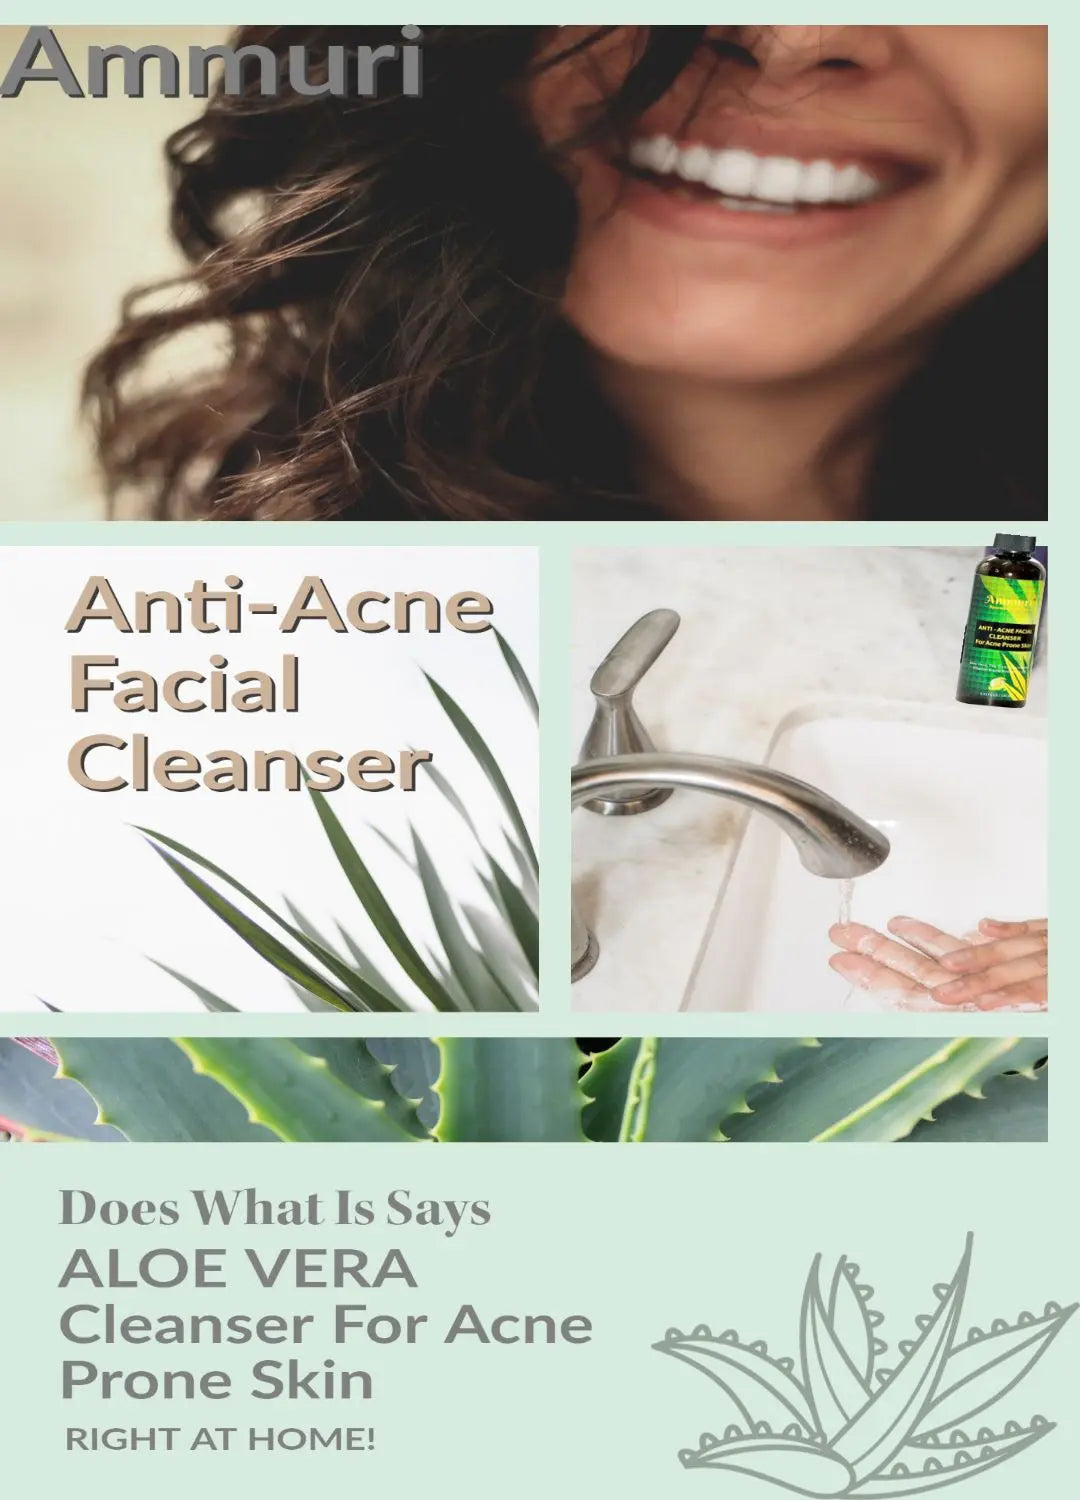 Ammuri Anti Acne Facial Cleanser with added Aloe Vera and Tea Tree Plus Niacinamide Ammuri Skincare